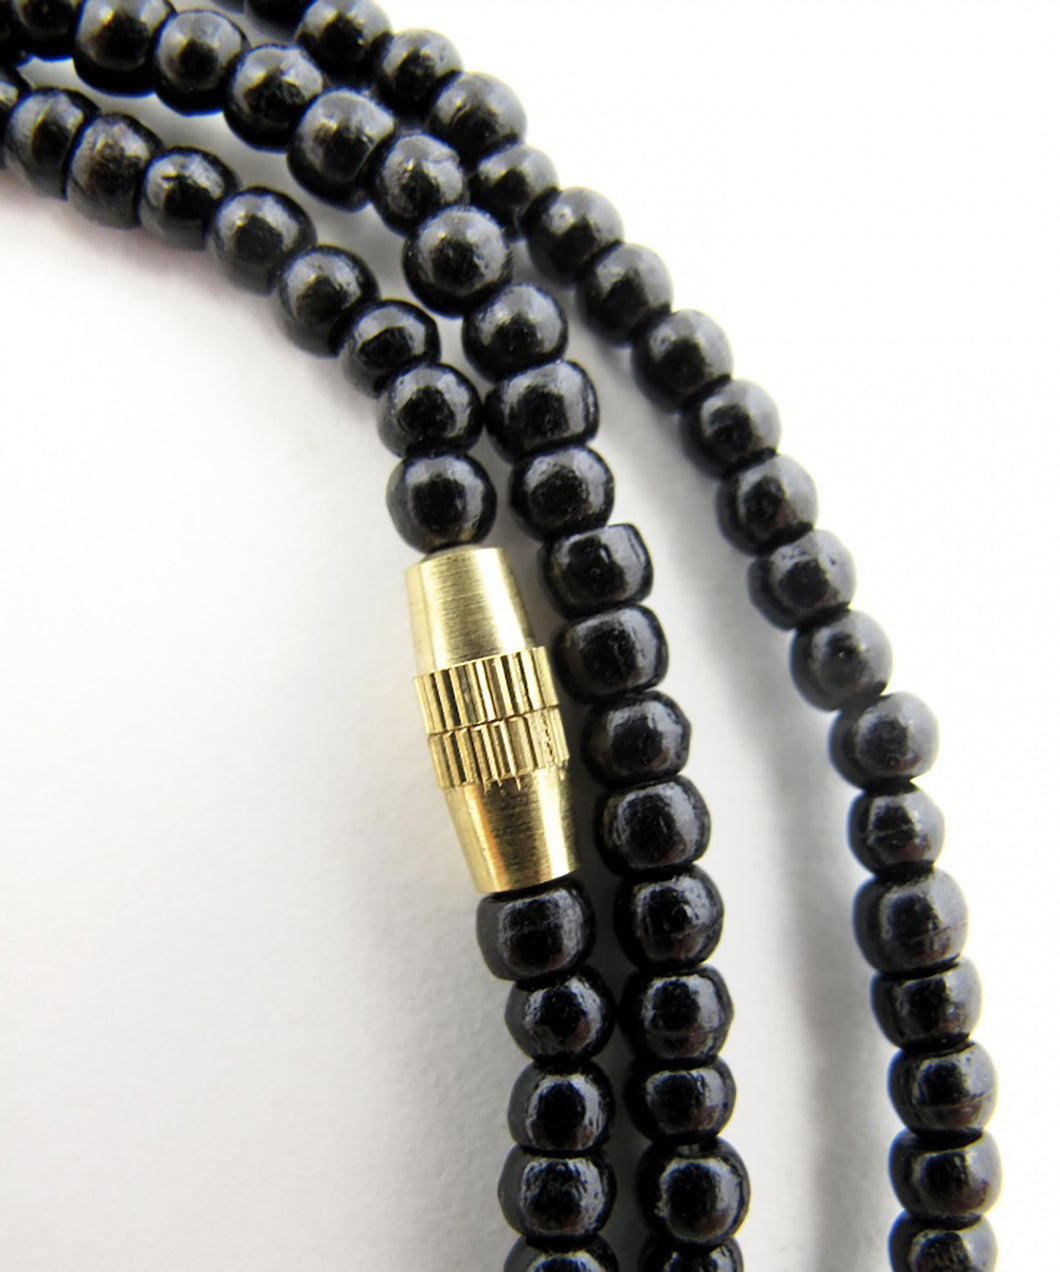 Ebony 3mm Bead Necklace 20 Inch